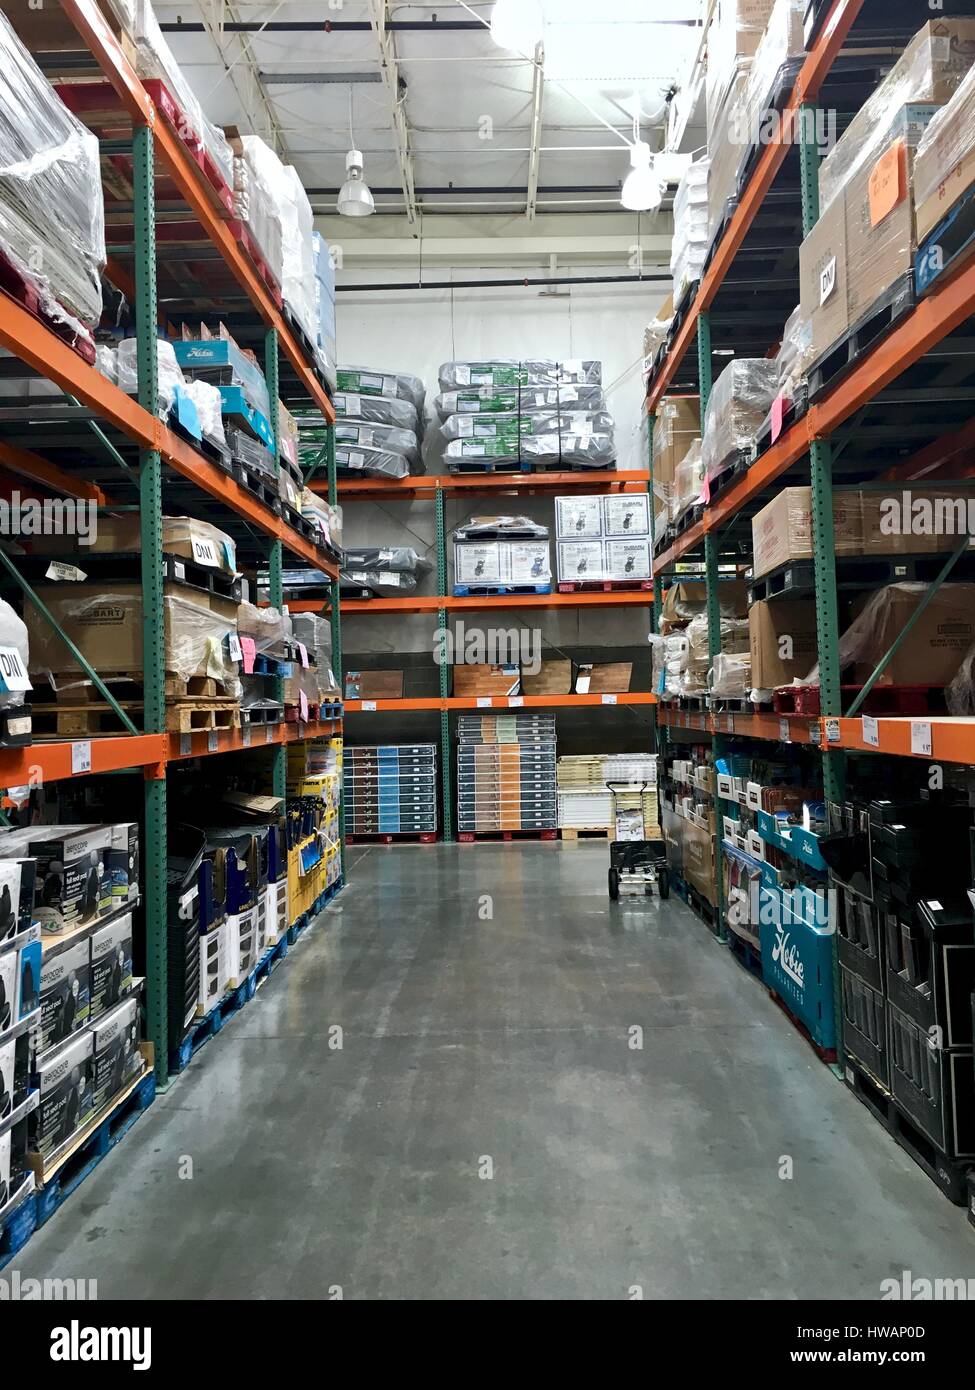 Costco wholesale warehouse Stock Photo